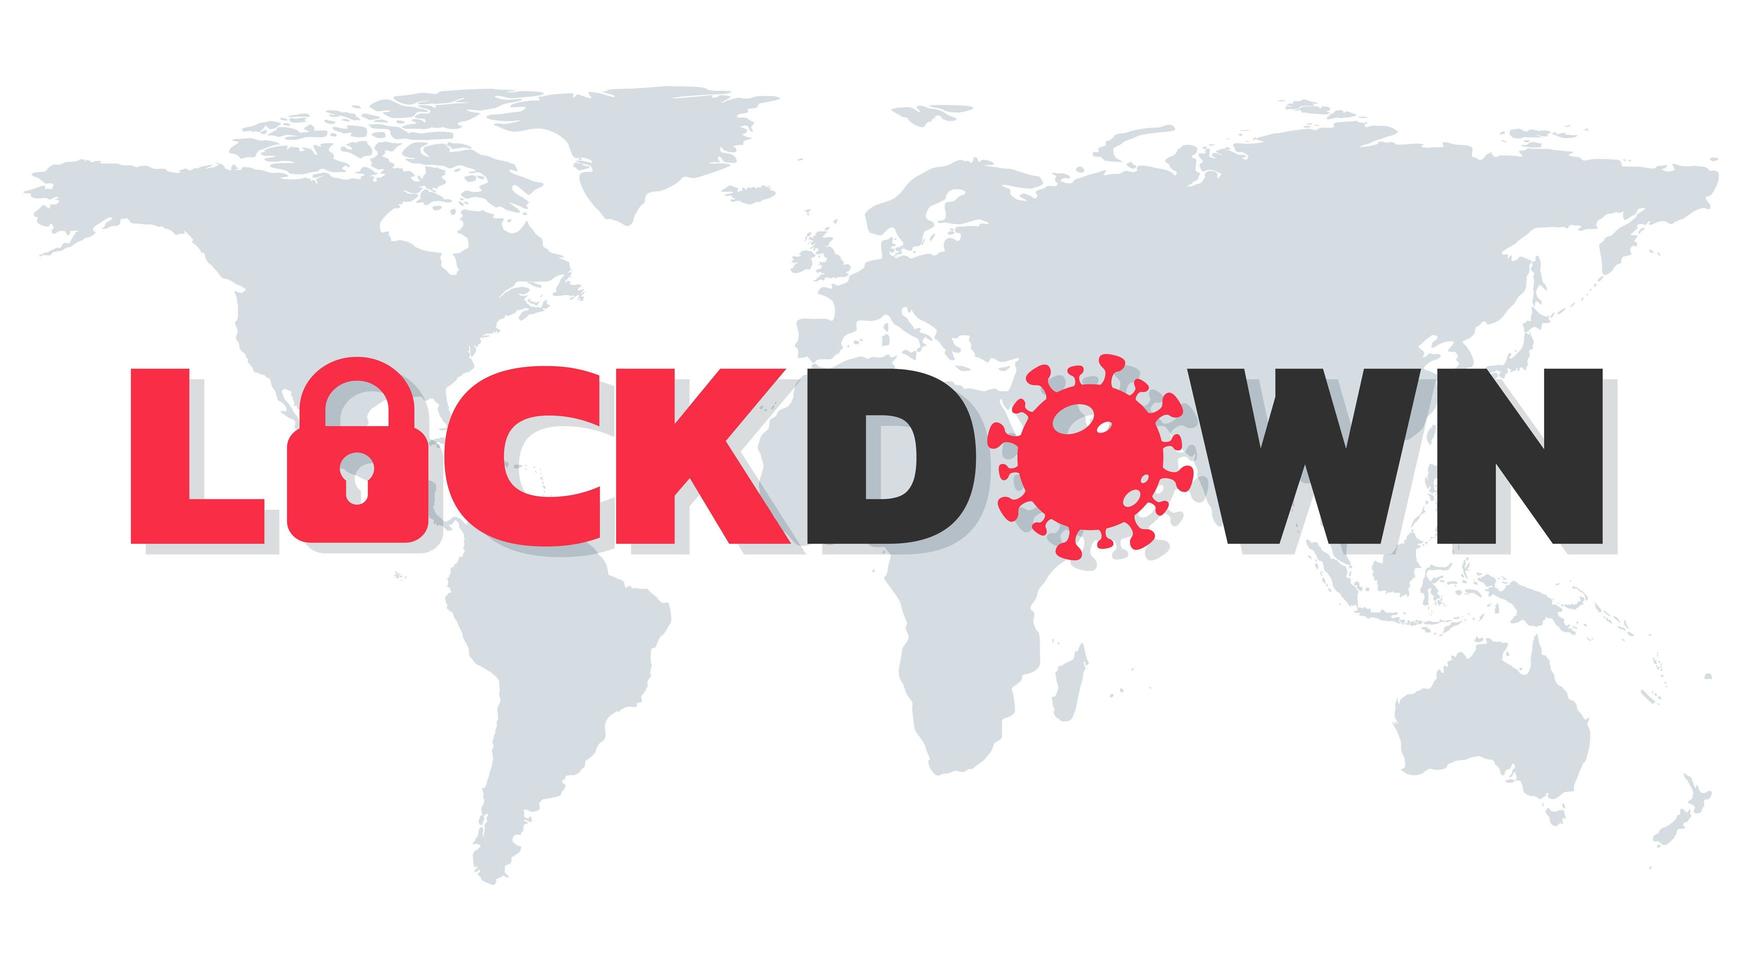 Lockdown Text on World Map vector